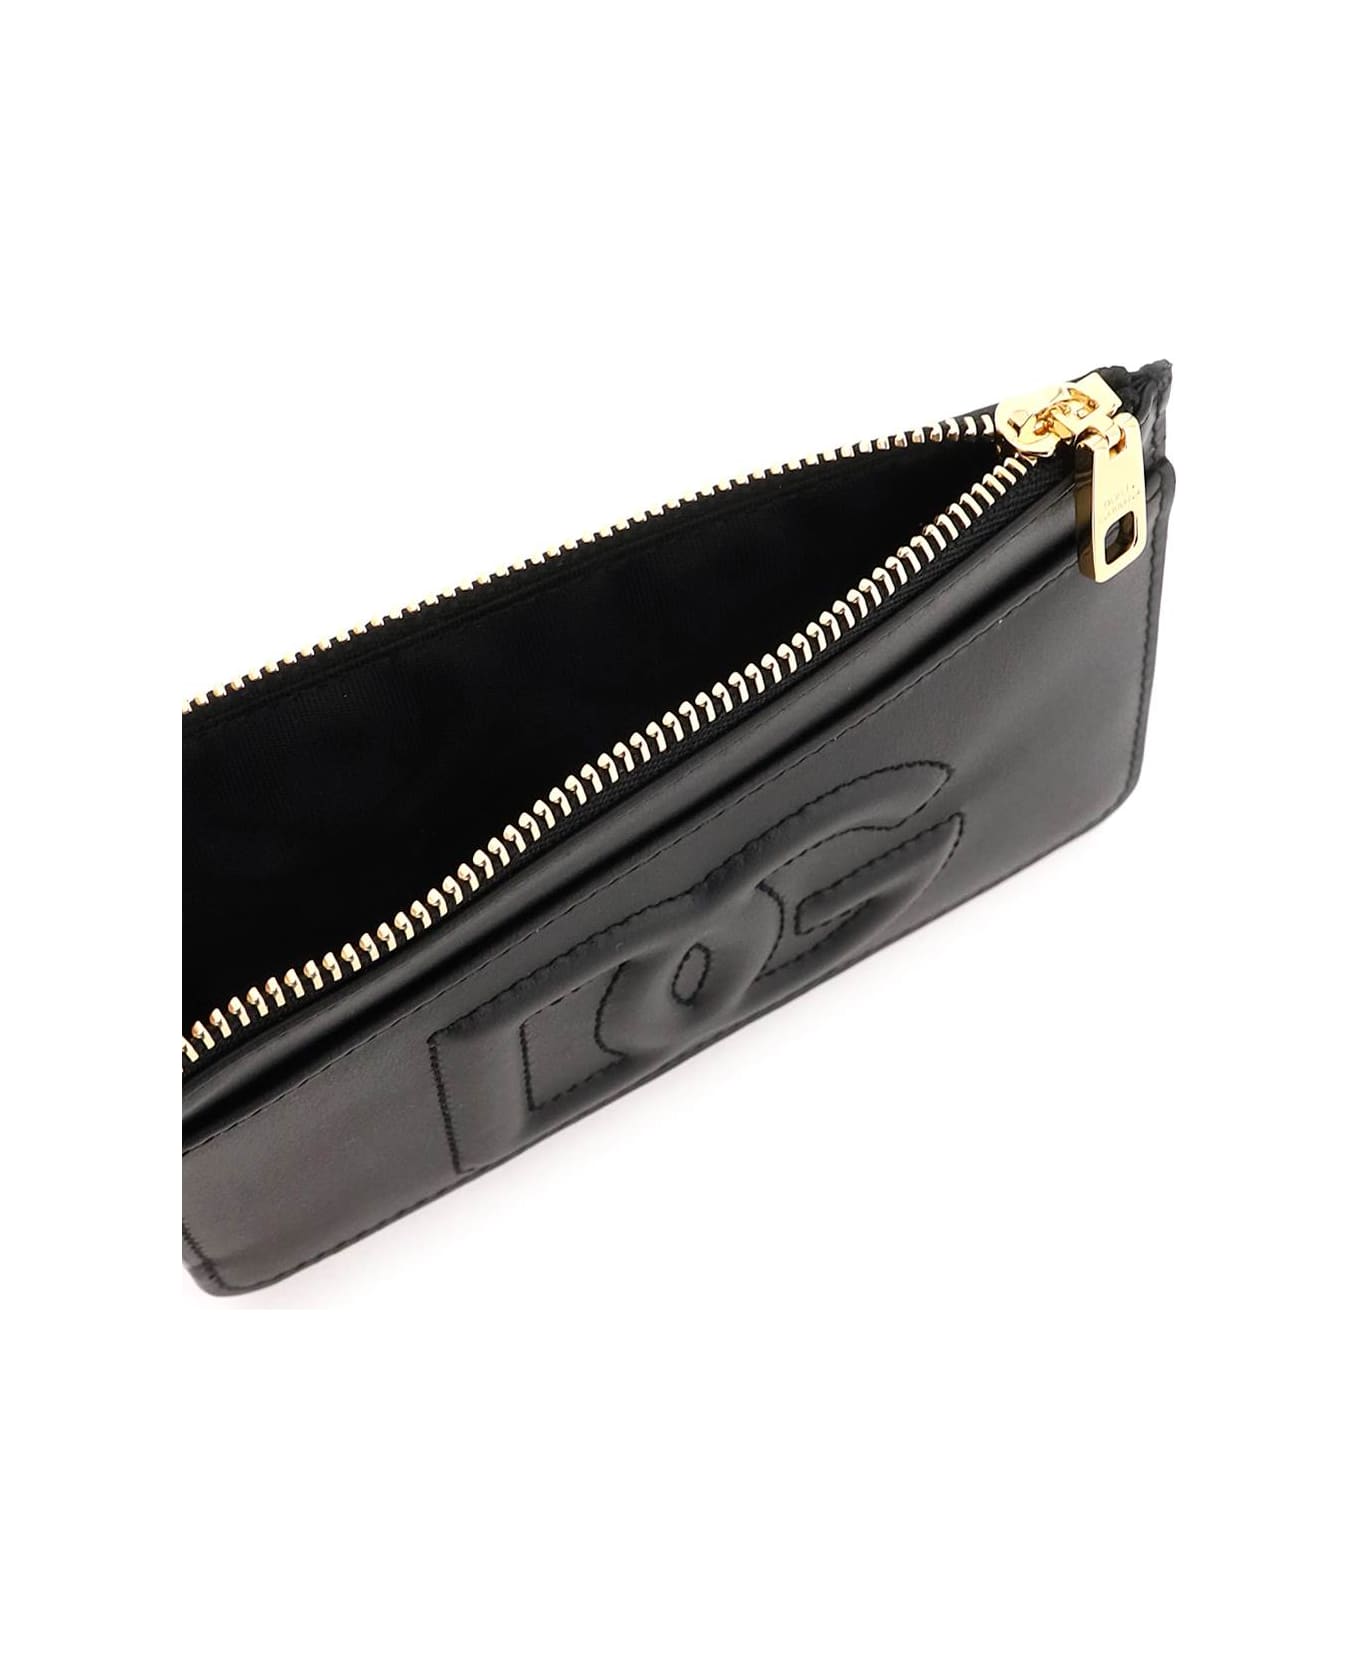 Dolce & Gabbana Logo Embossed Top Zip Card Holder - Black 財布